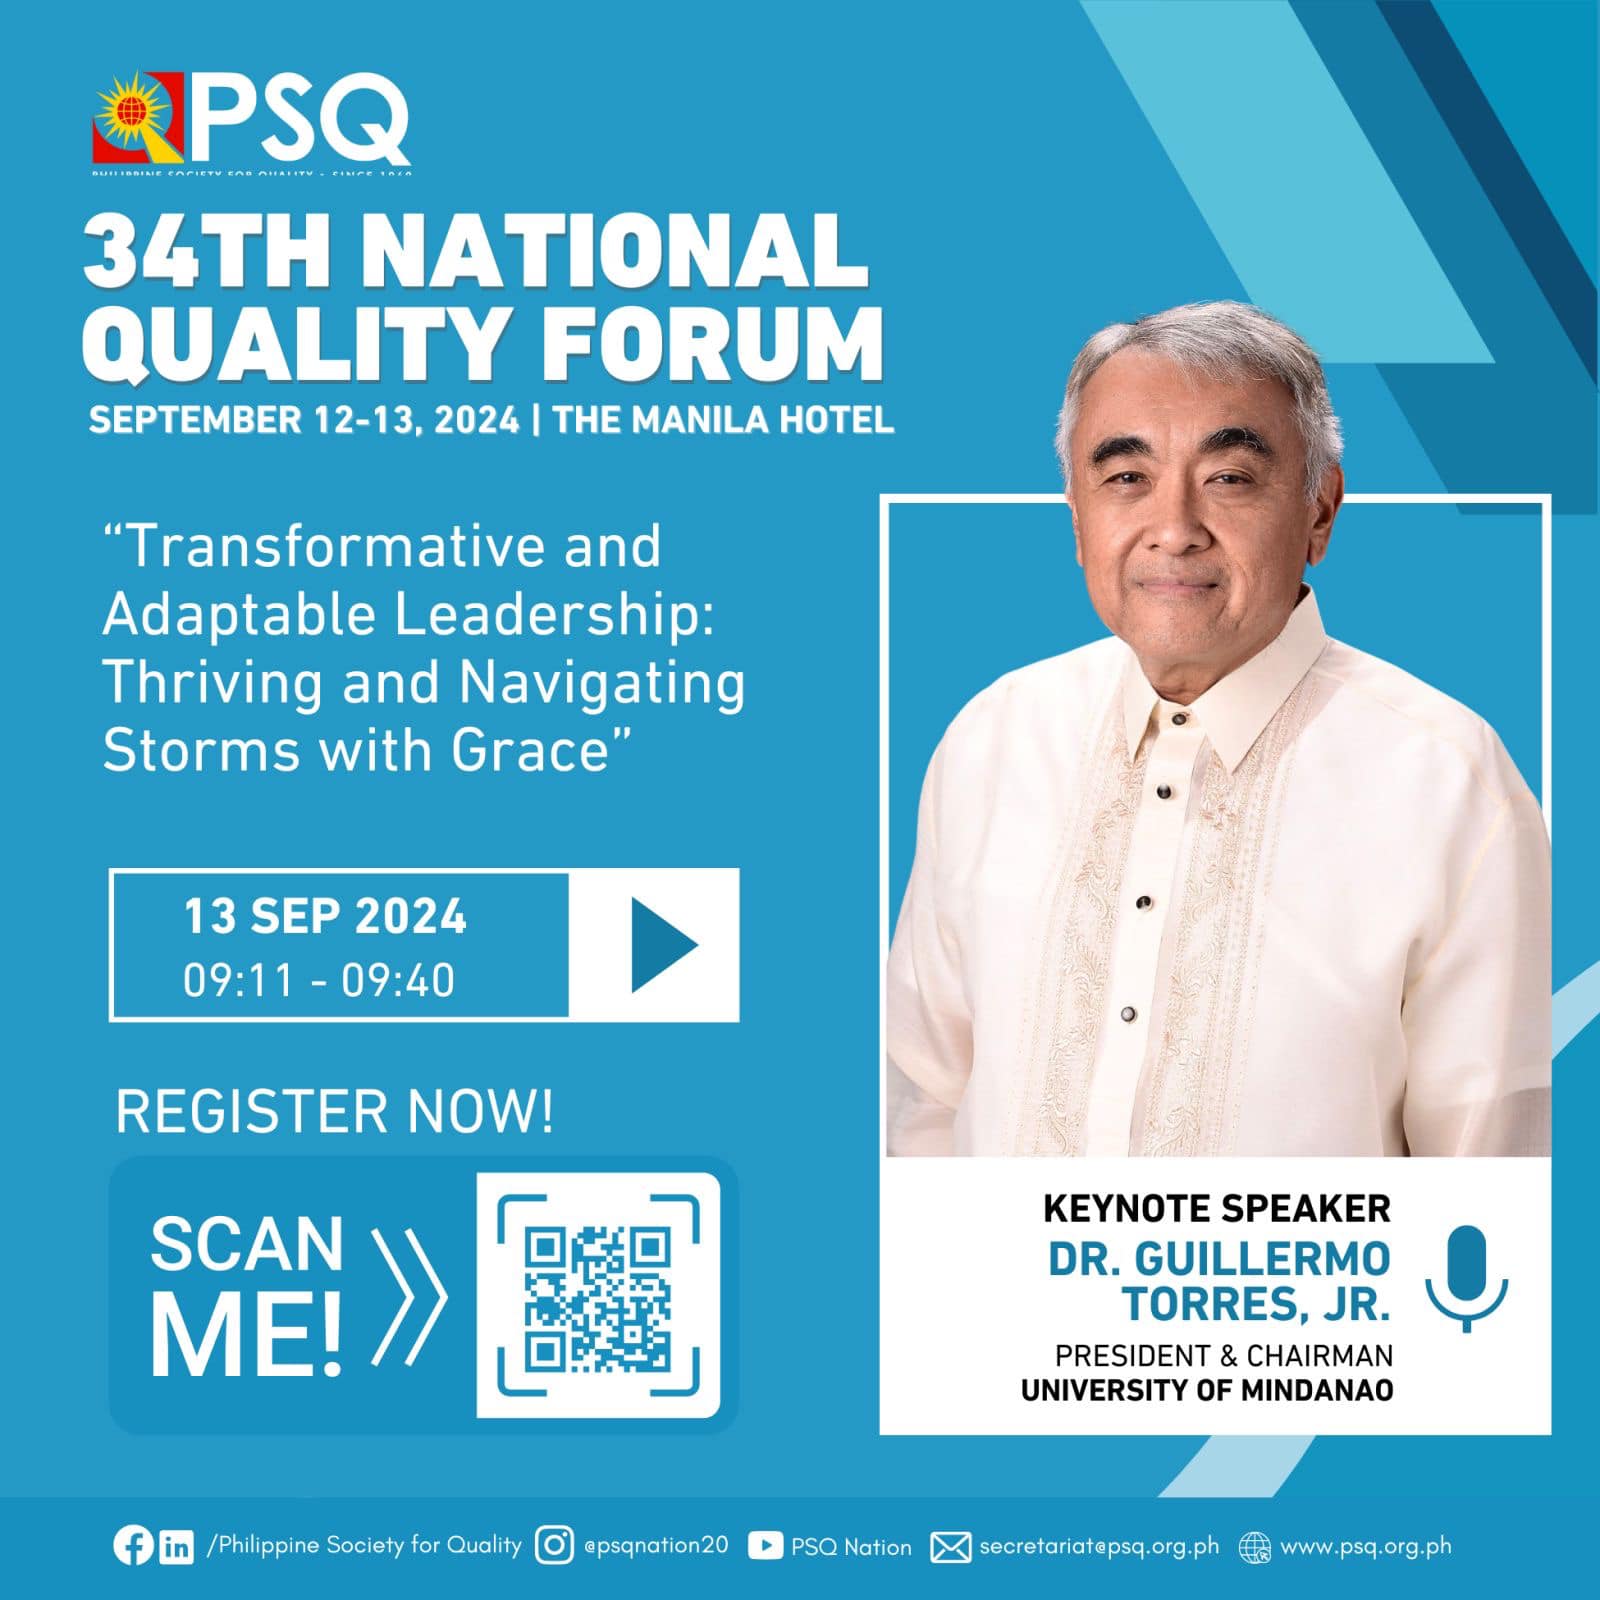 Dr. Guillermo P. Torres Jr is PSQ's National Quality Forum Keynote Speaker